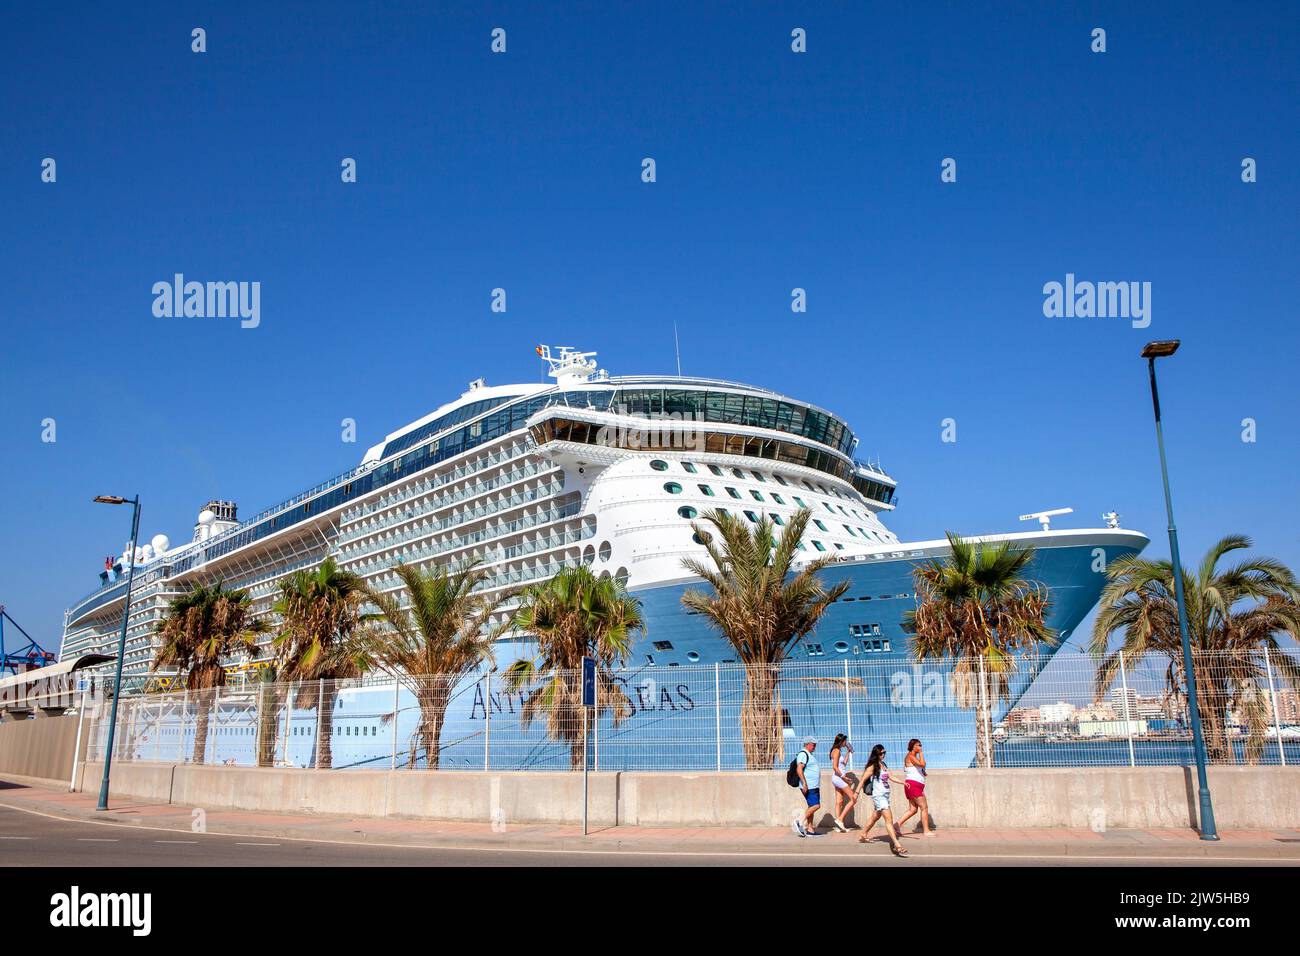 Royal Caribbean International Anthem of the Seas Quantum class cruise ship docked Stock Photo